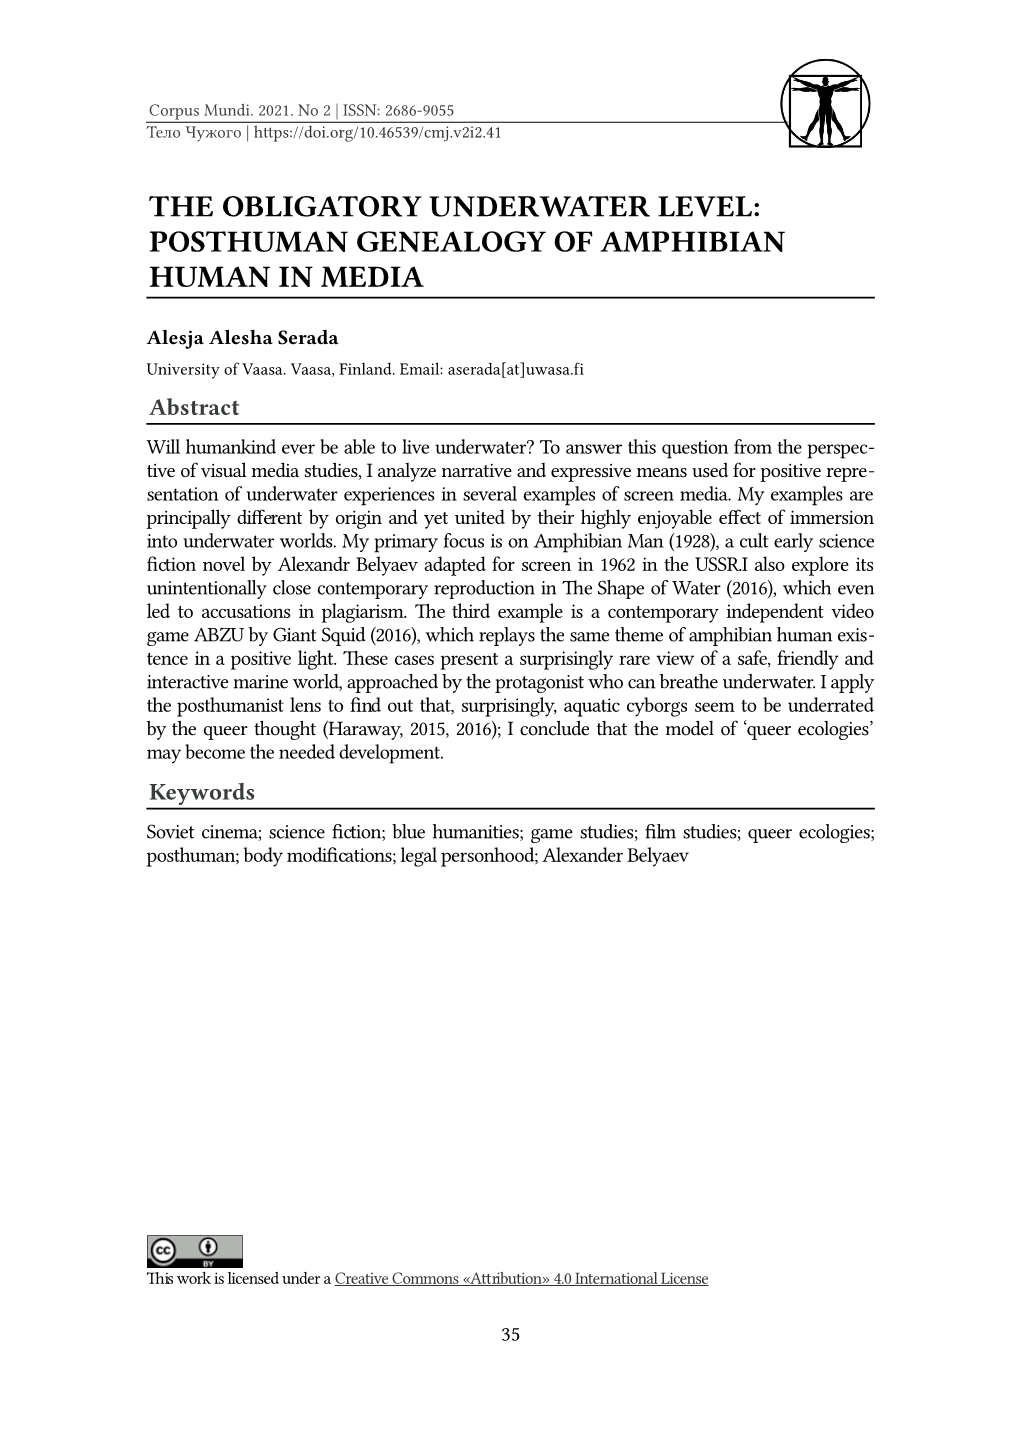 Posthuman Genealogy of Amphibian Human in Media